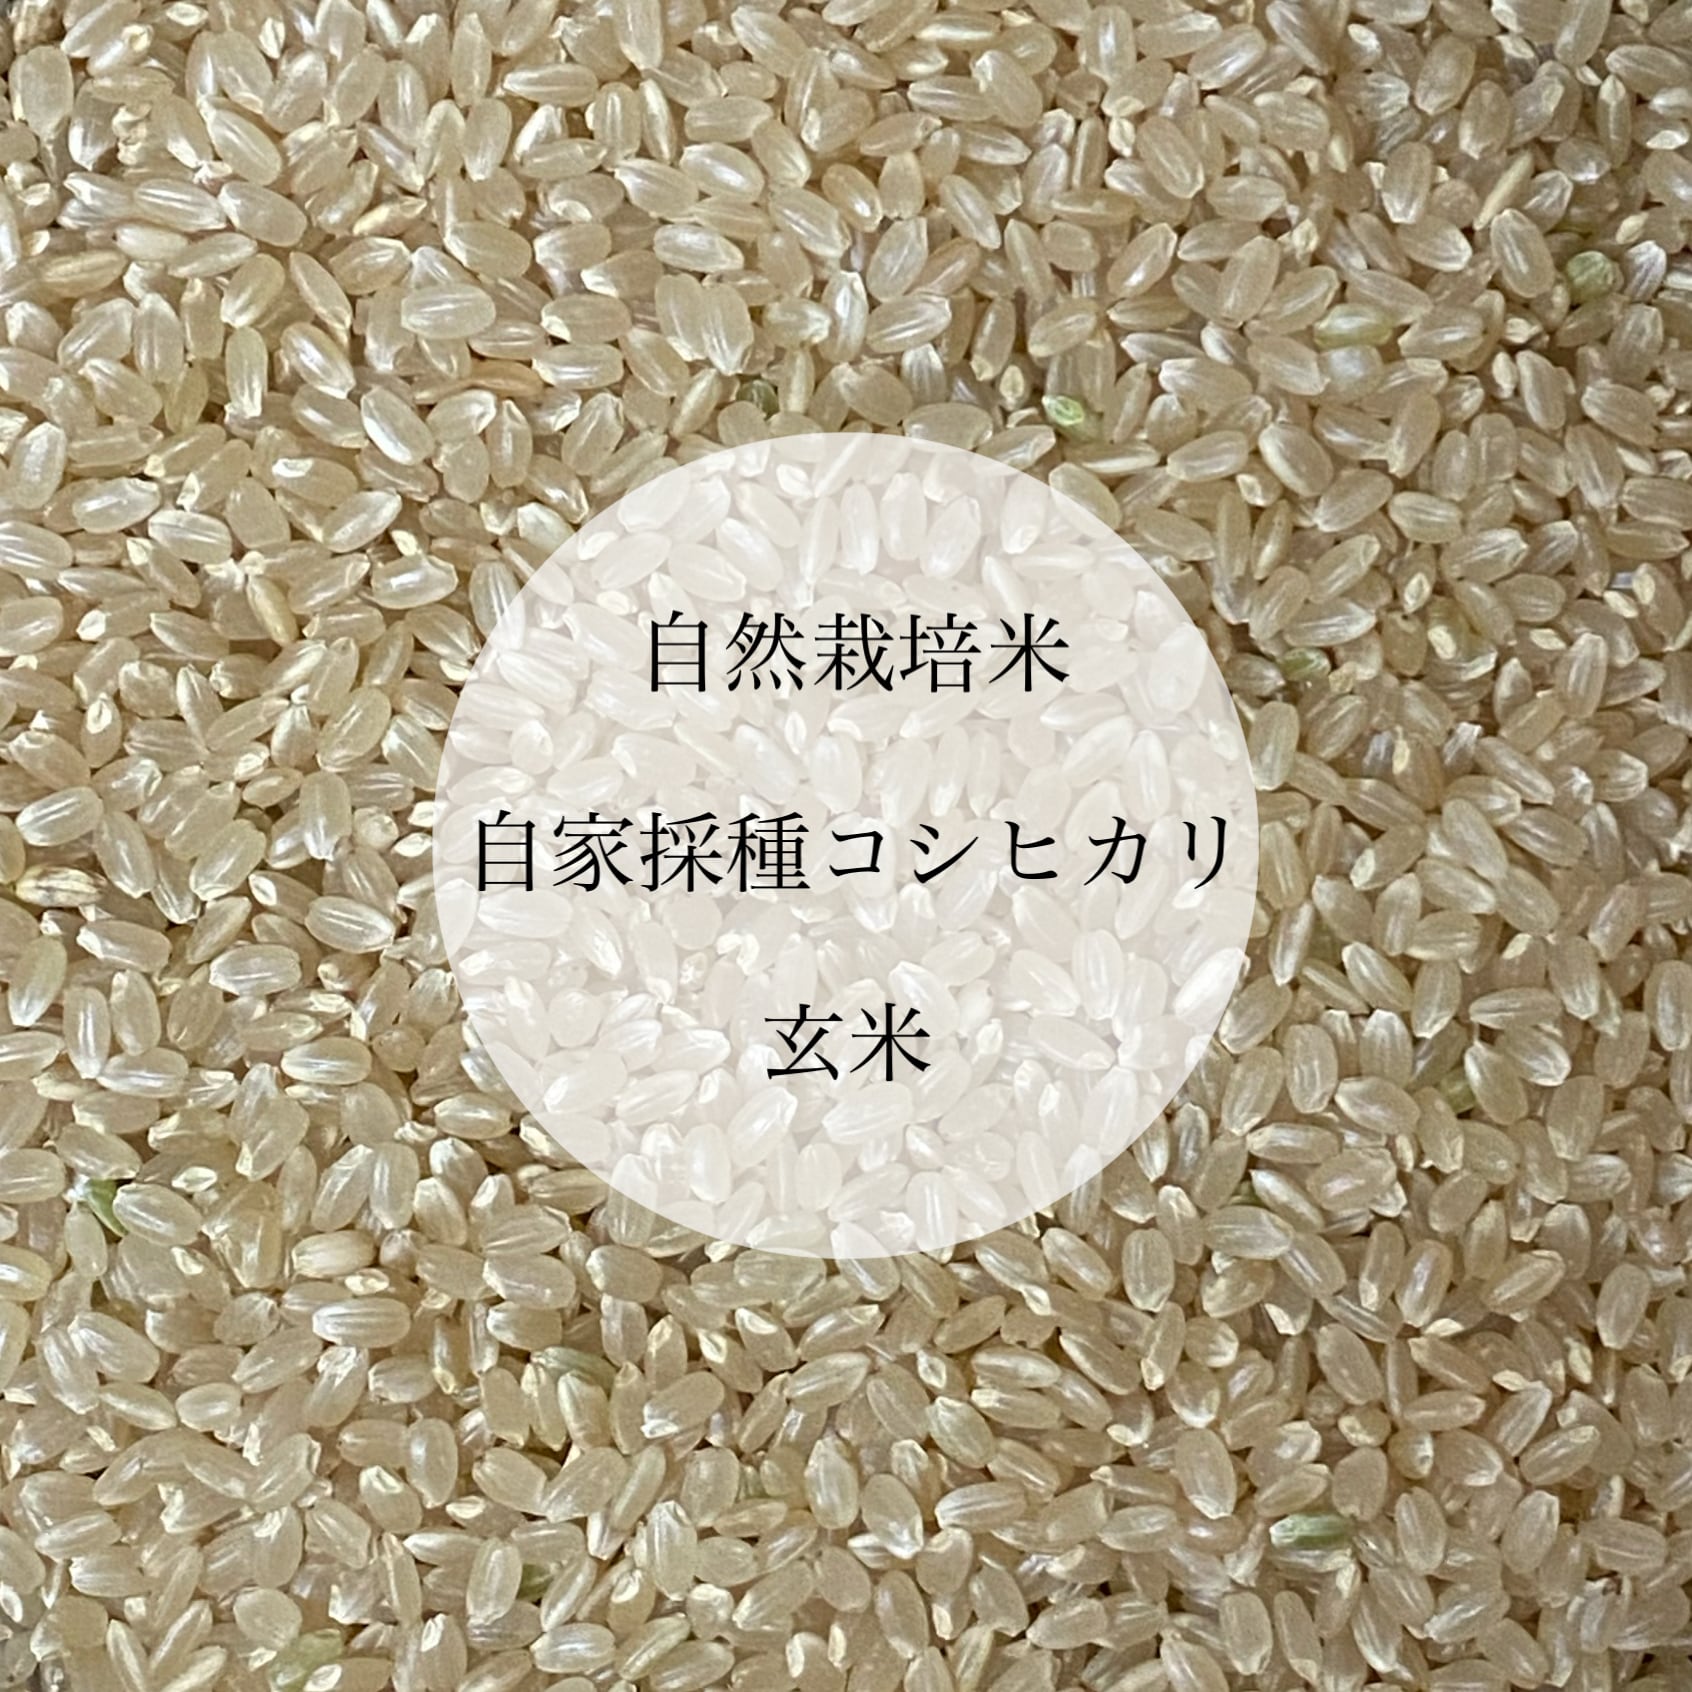 令和5年産新米 自然栽培米 自家採種コシヒカリ 玄米5kg 農薬不使用